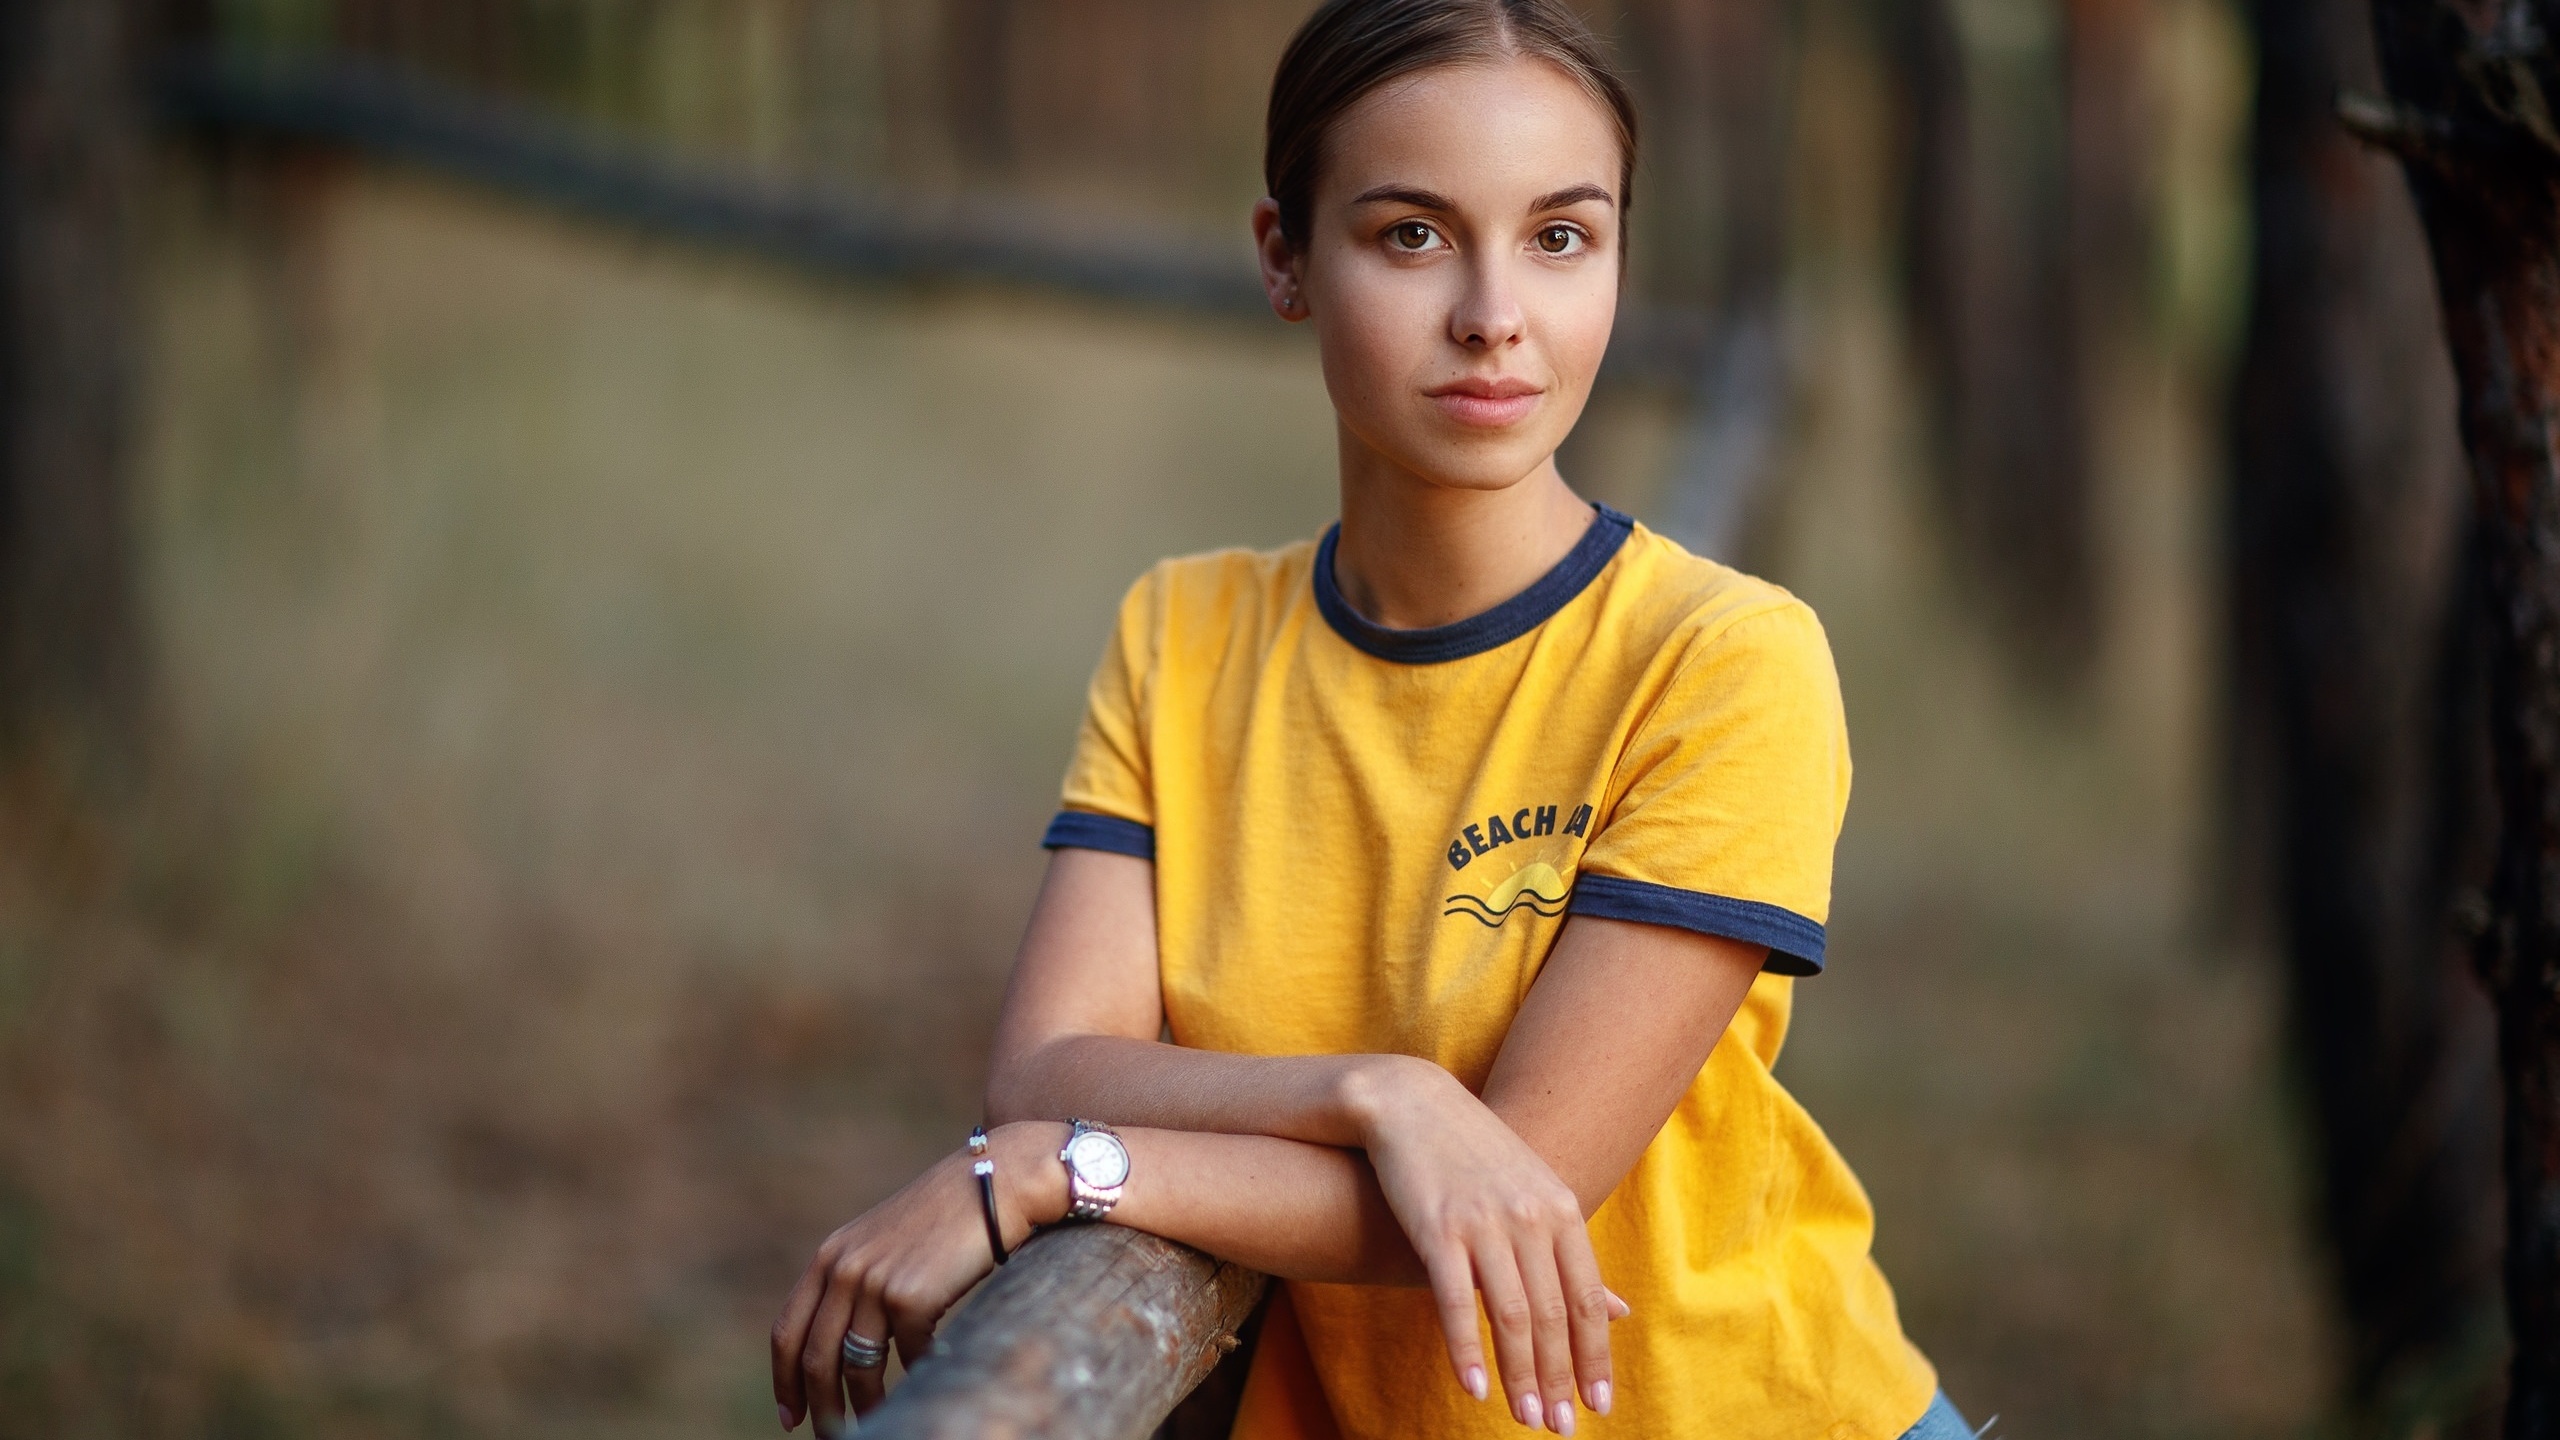 women, yellow t-shirt, jeans, portrait, forest, watch, brunette, women outdoors, trees